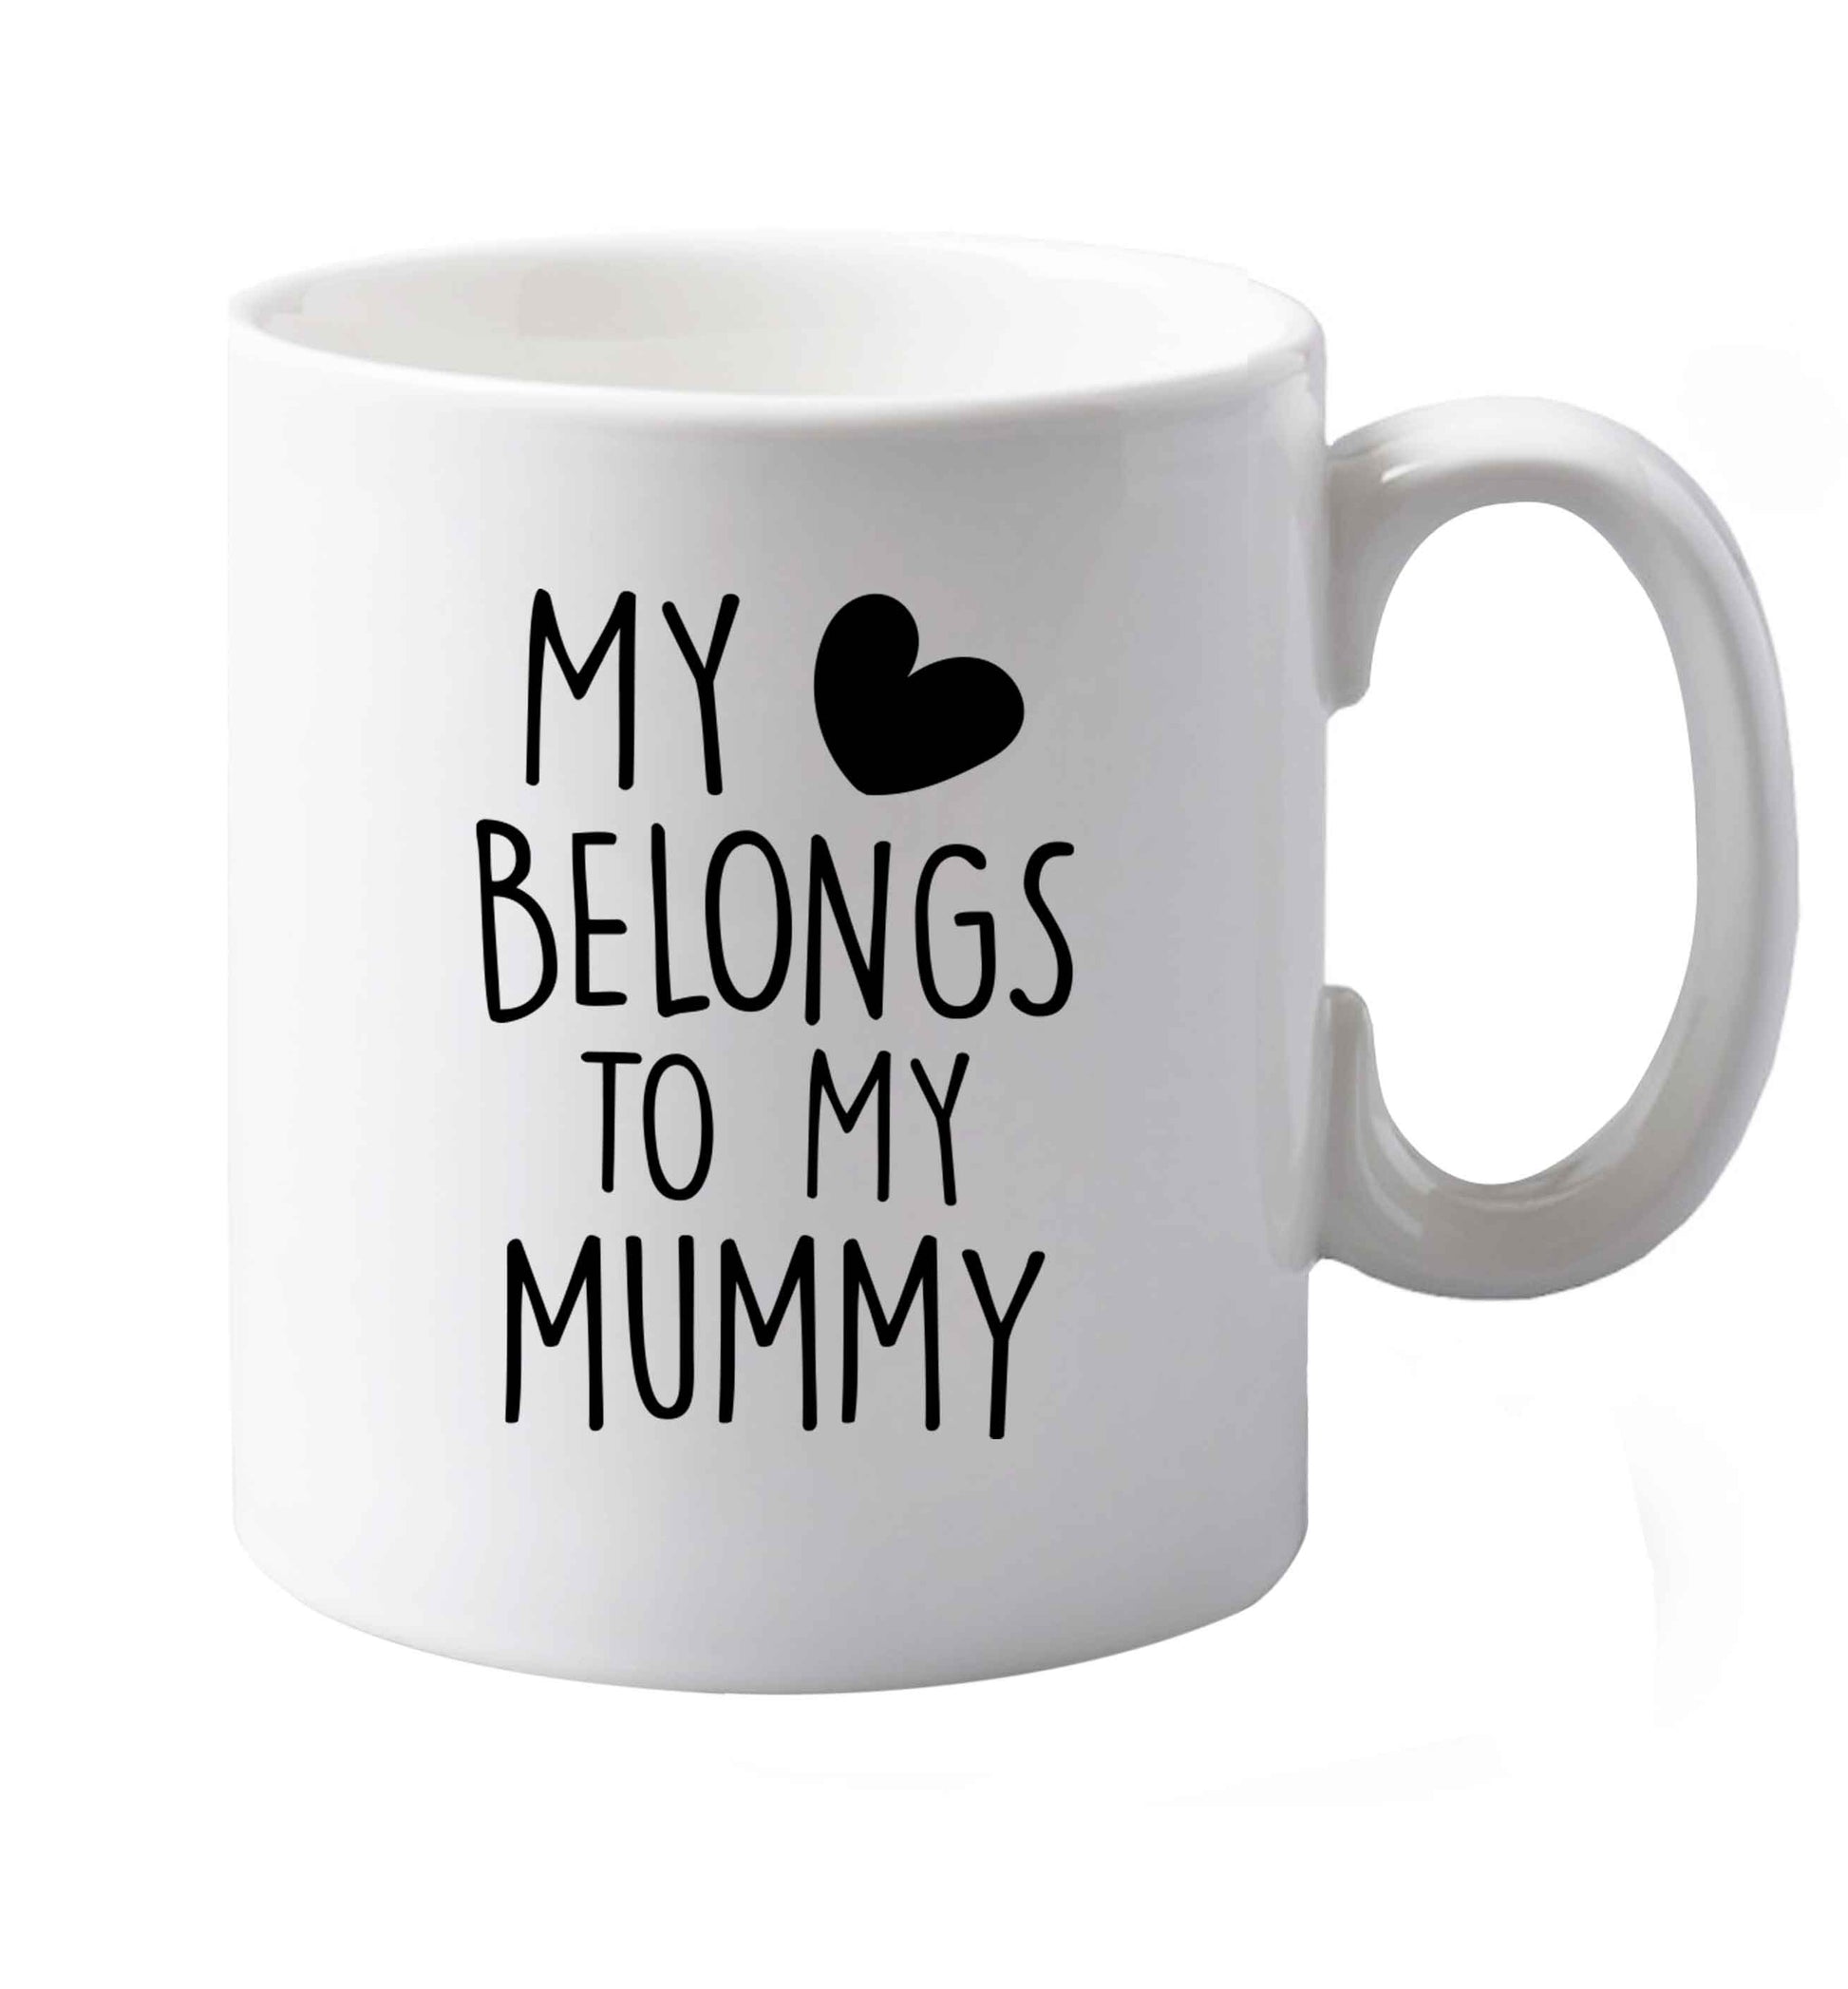 10 oz My heart belongs to my mummy ceramic mug both sides